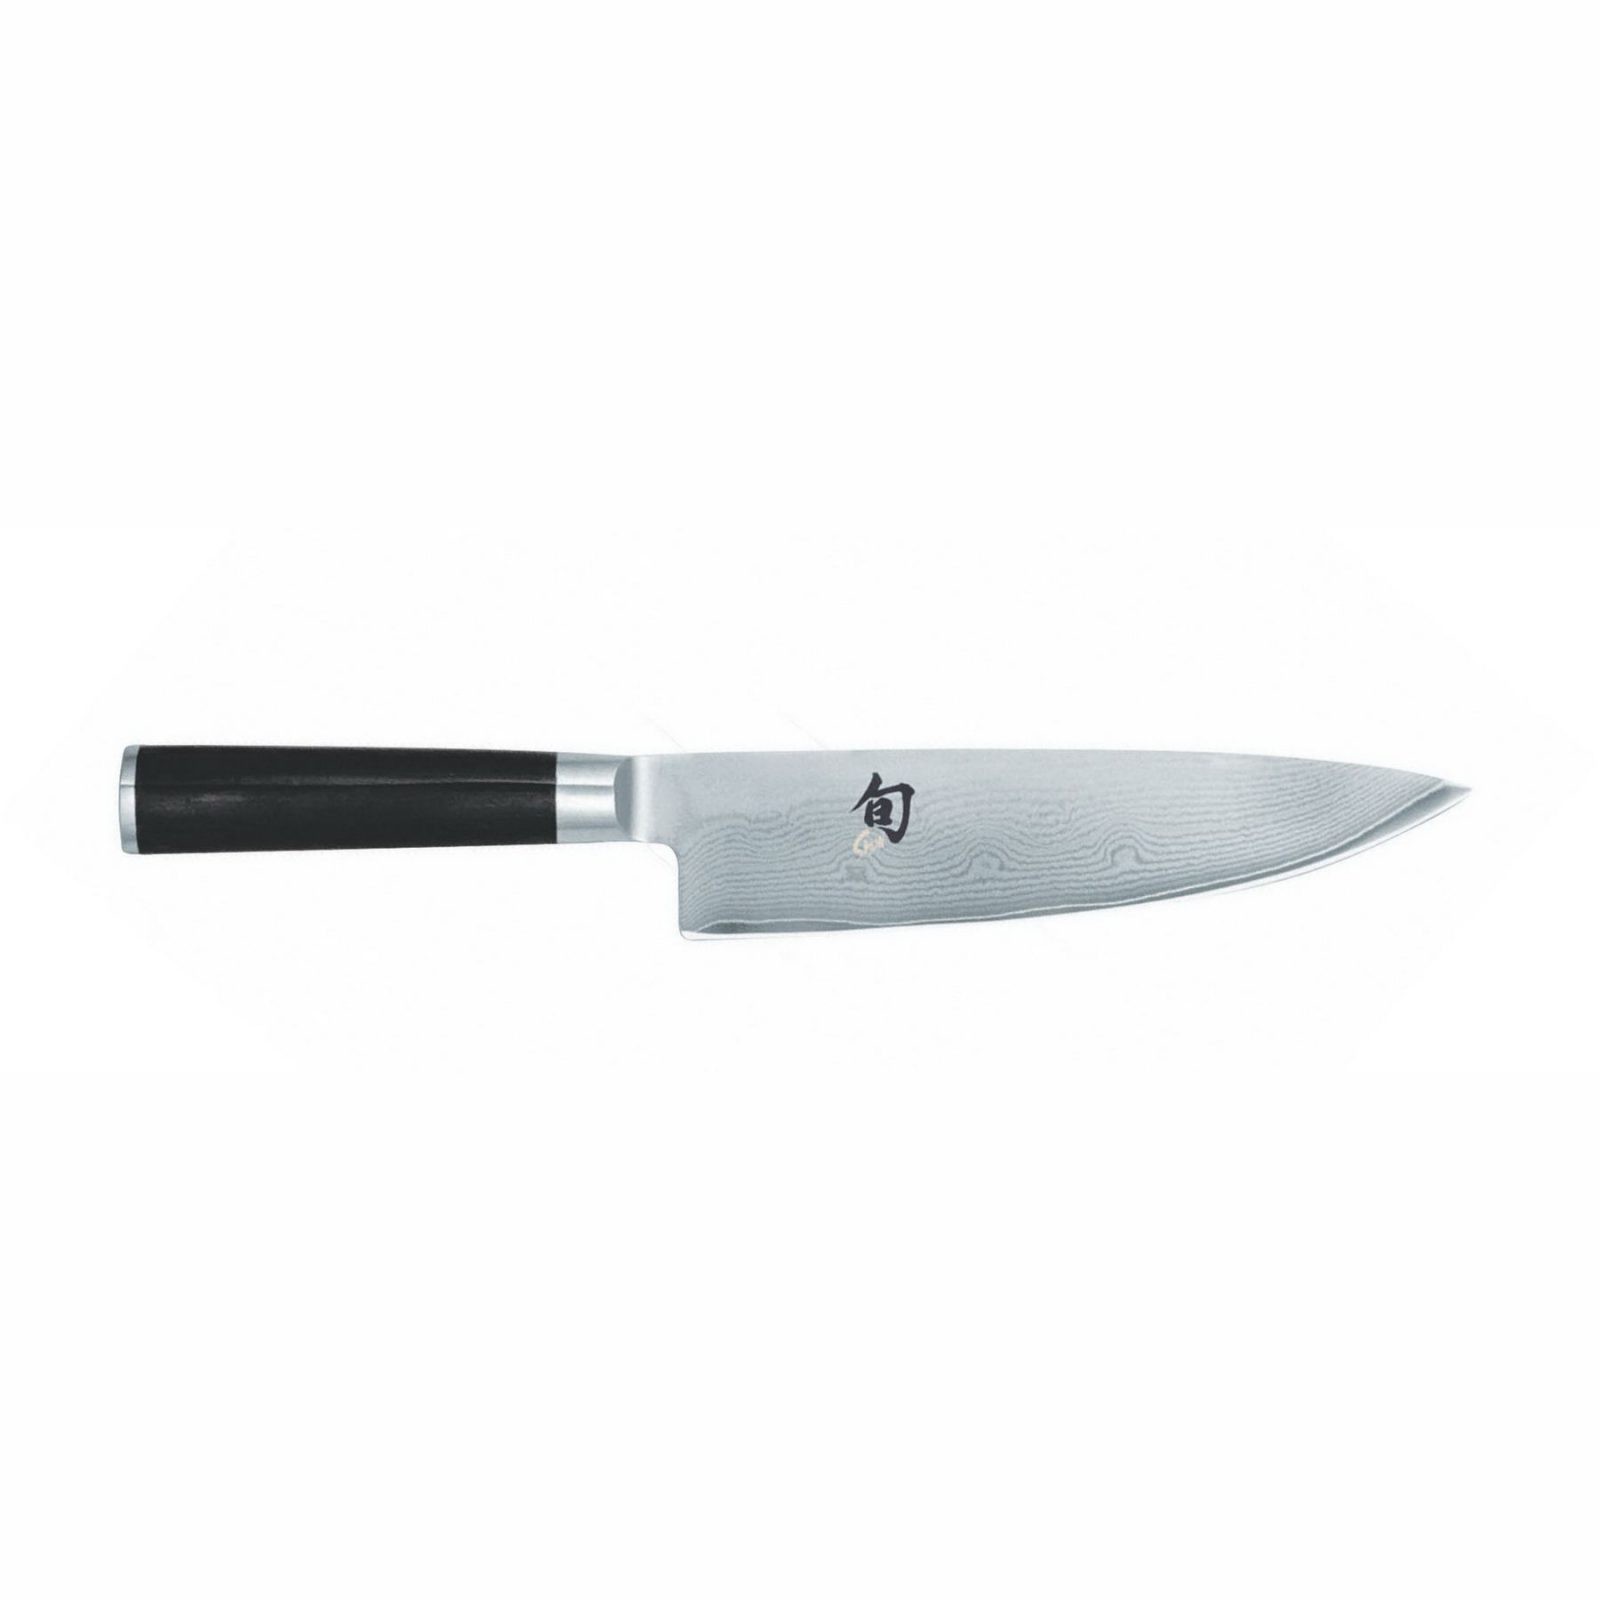 https://www.cuchillalia.com/wordpress/wp-content/uploads/2015/02/cuchillalia-kai-shun-damasco-dm-0706-cuchillo-chef-20cm.jpg